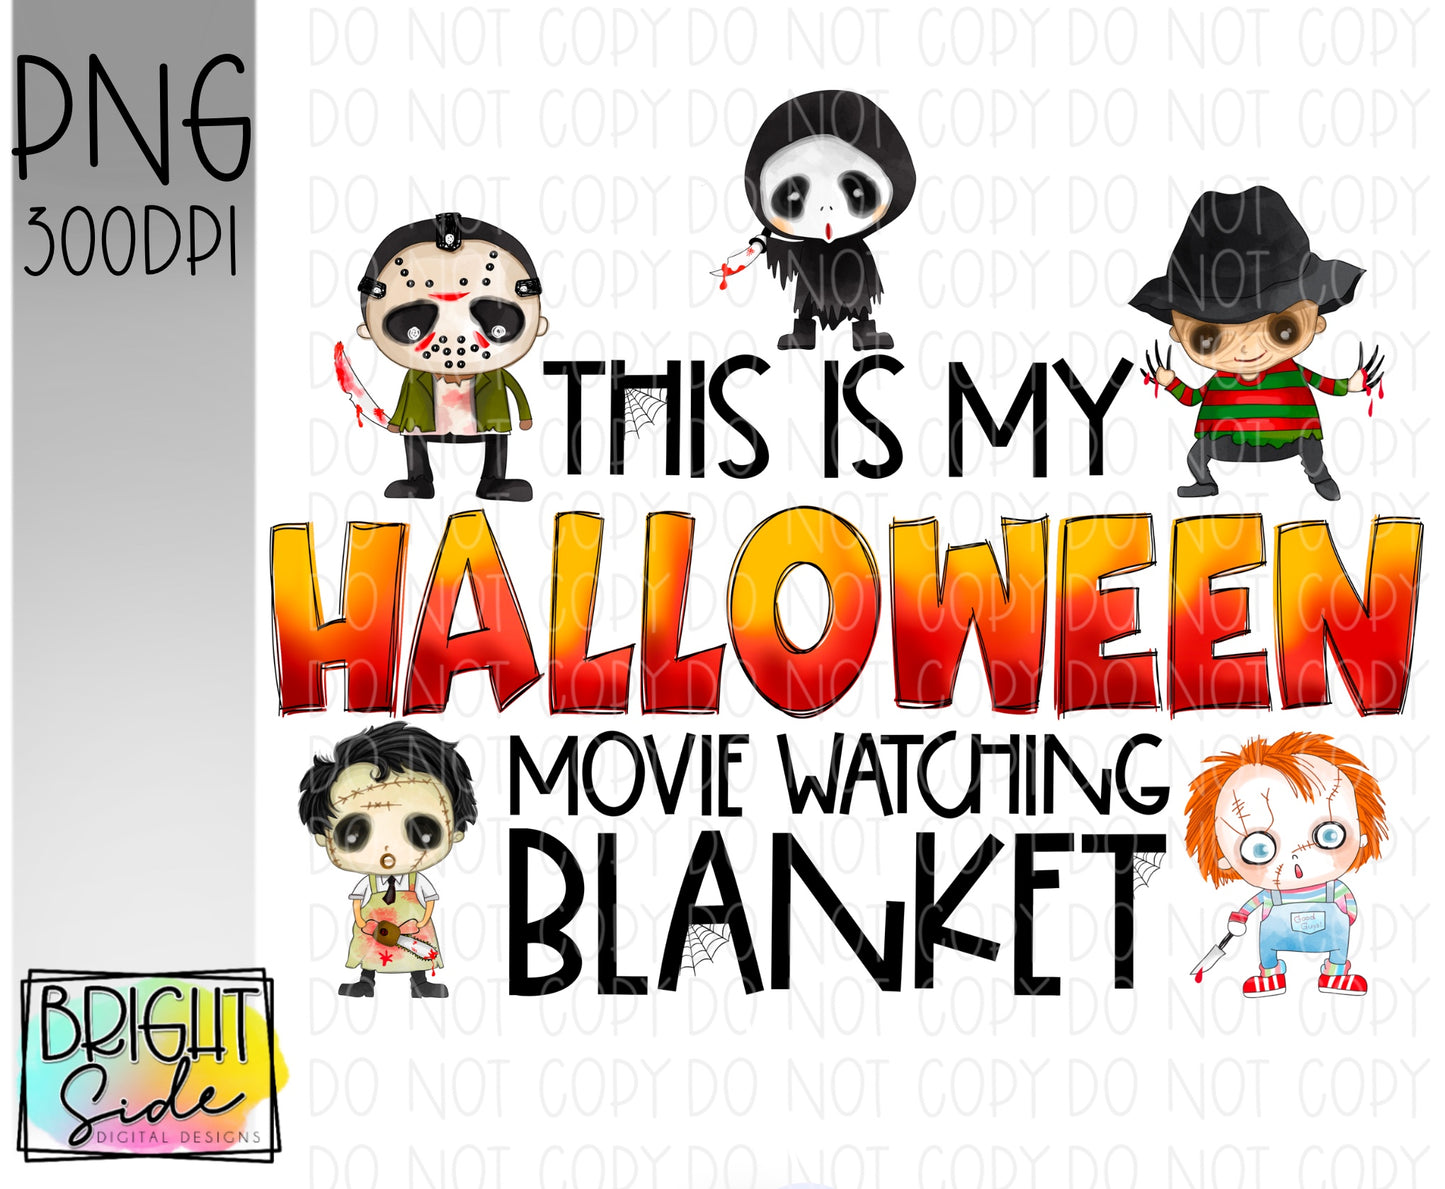 This is my Halloween movie watching Blanket